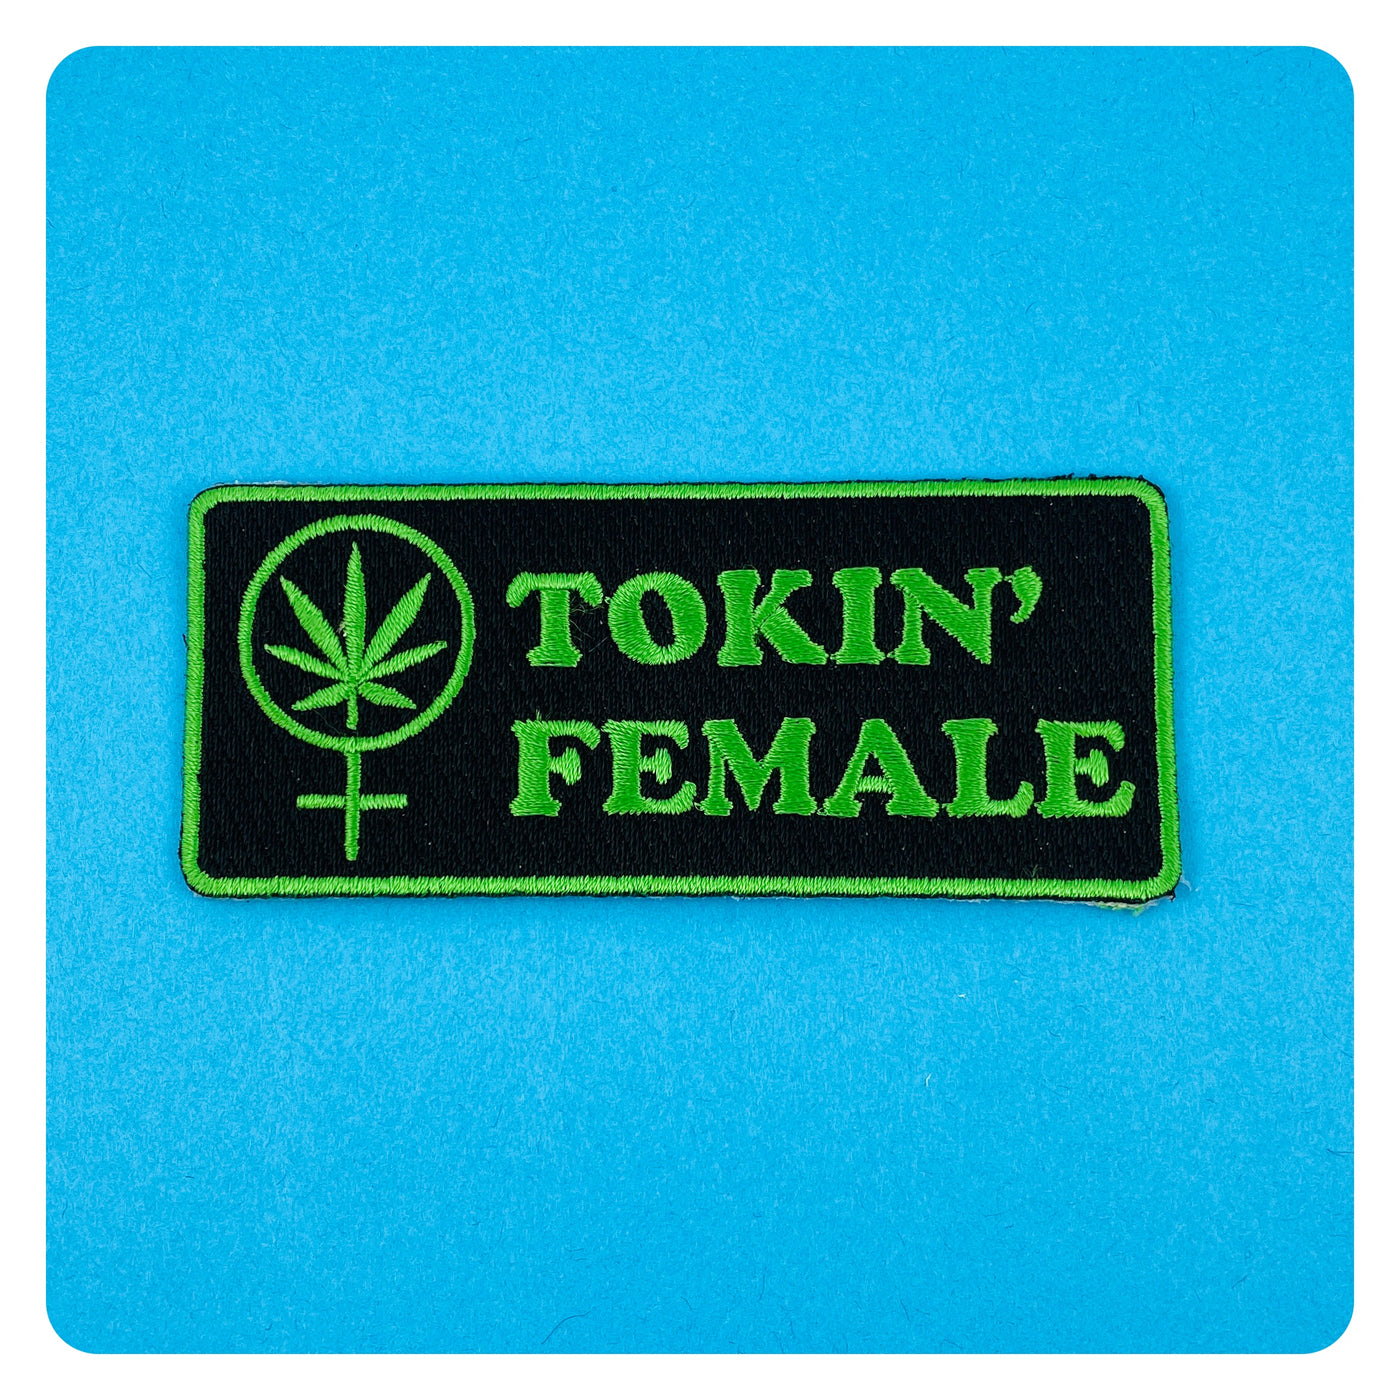 Tokin' Female Iron On Patch